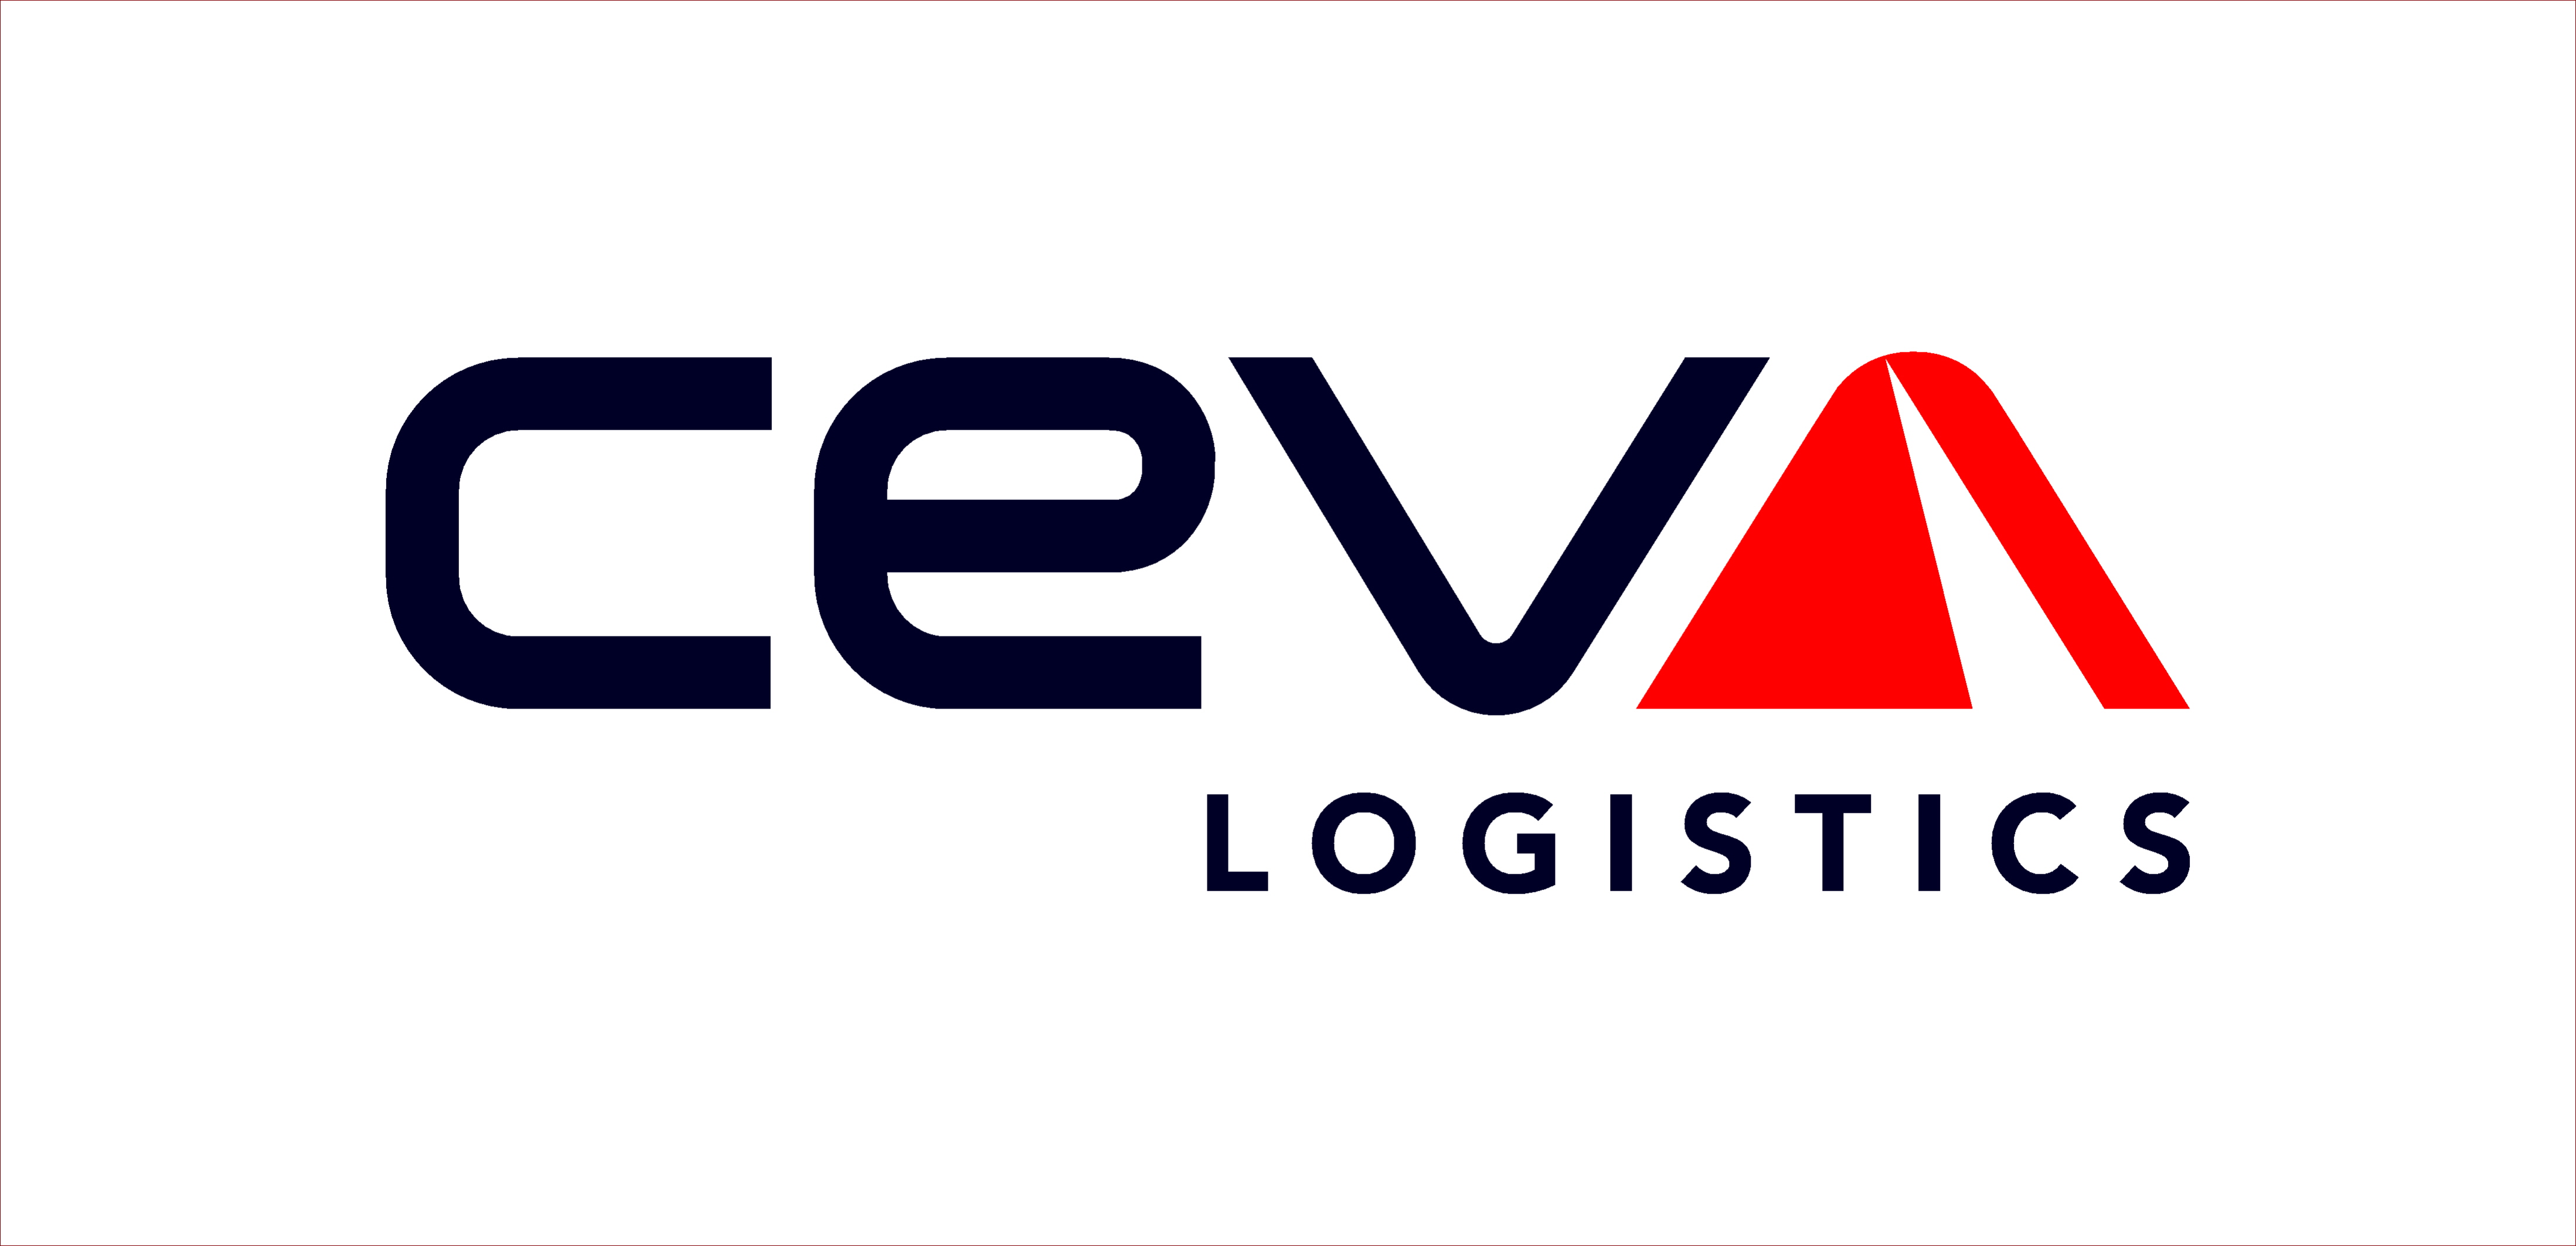 Ceva Logo 2019